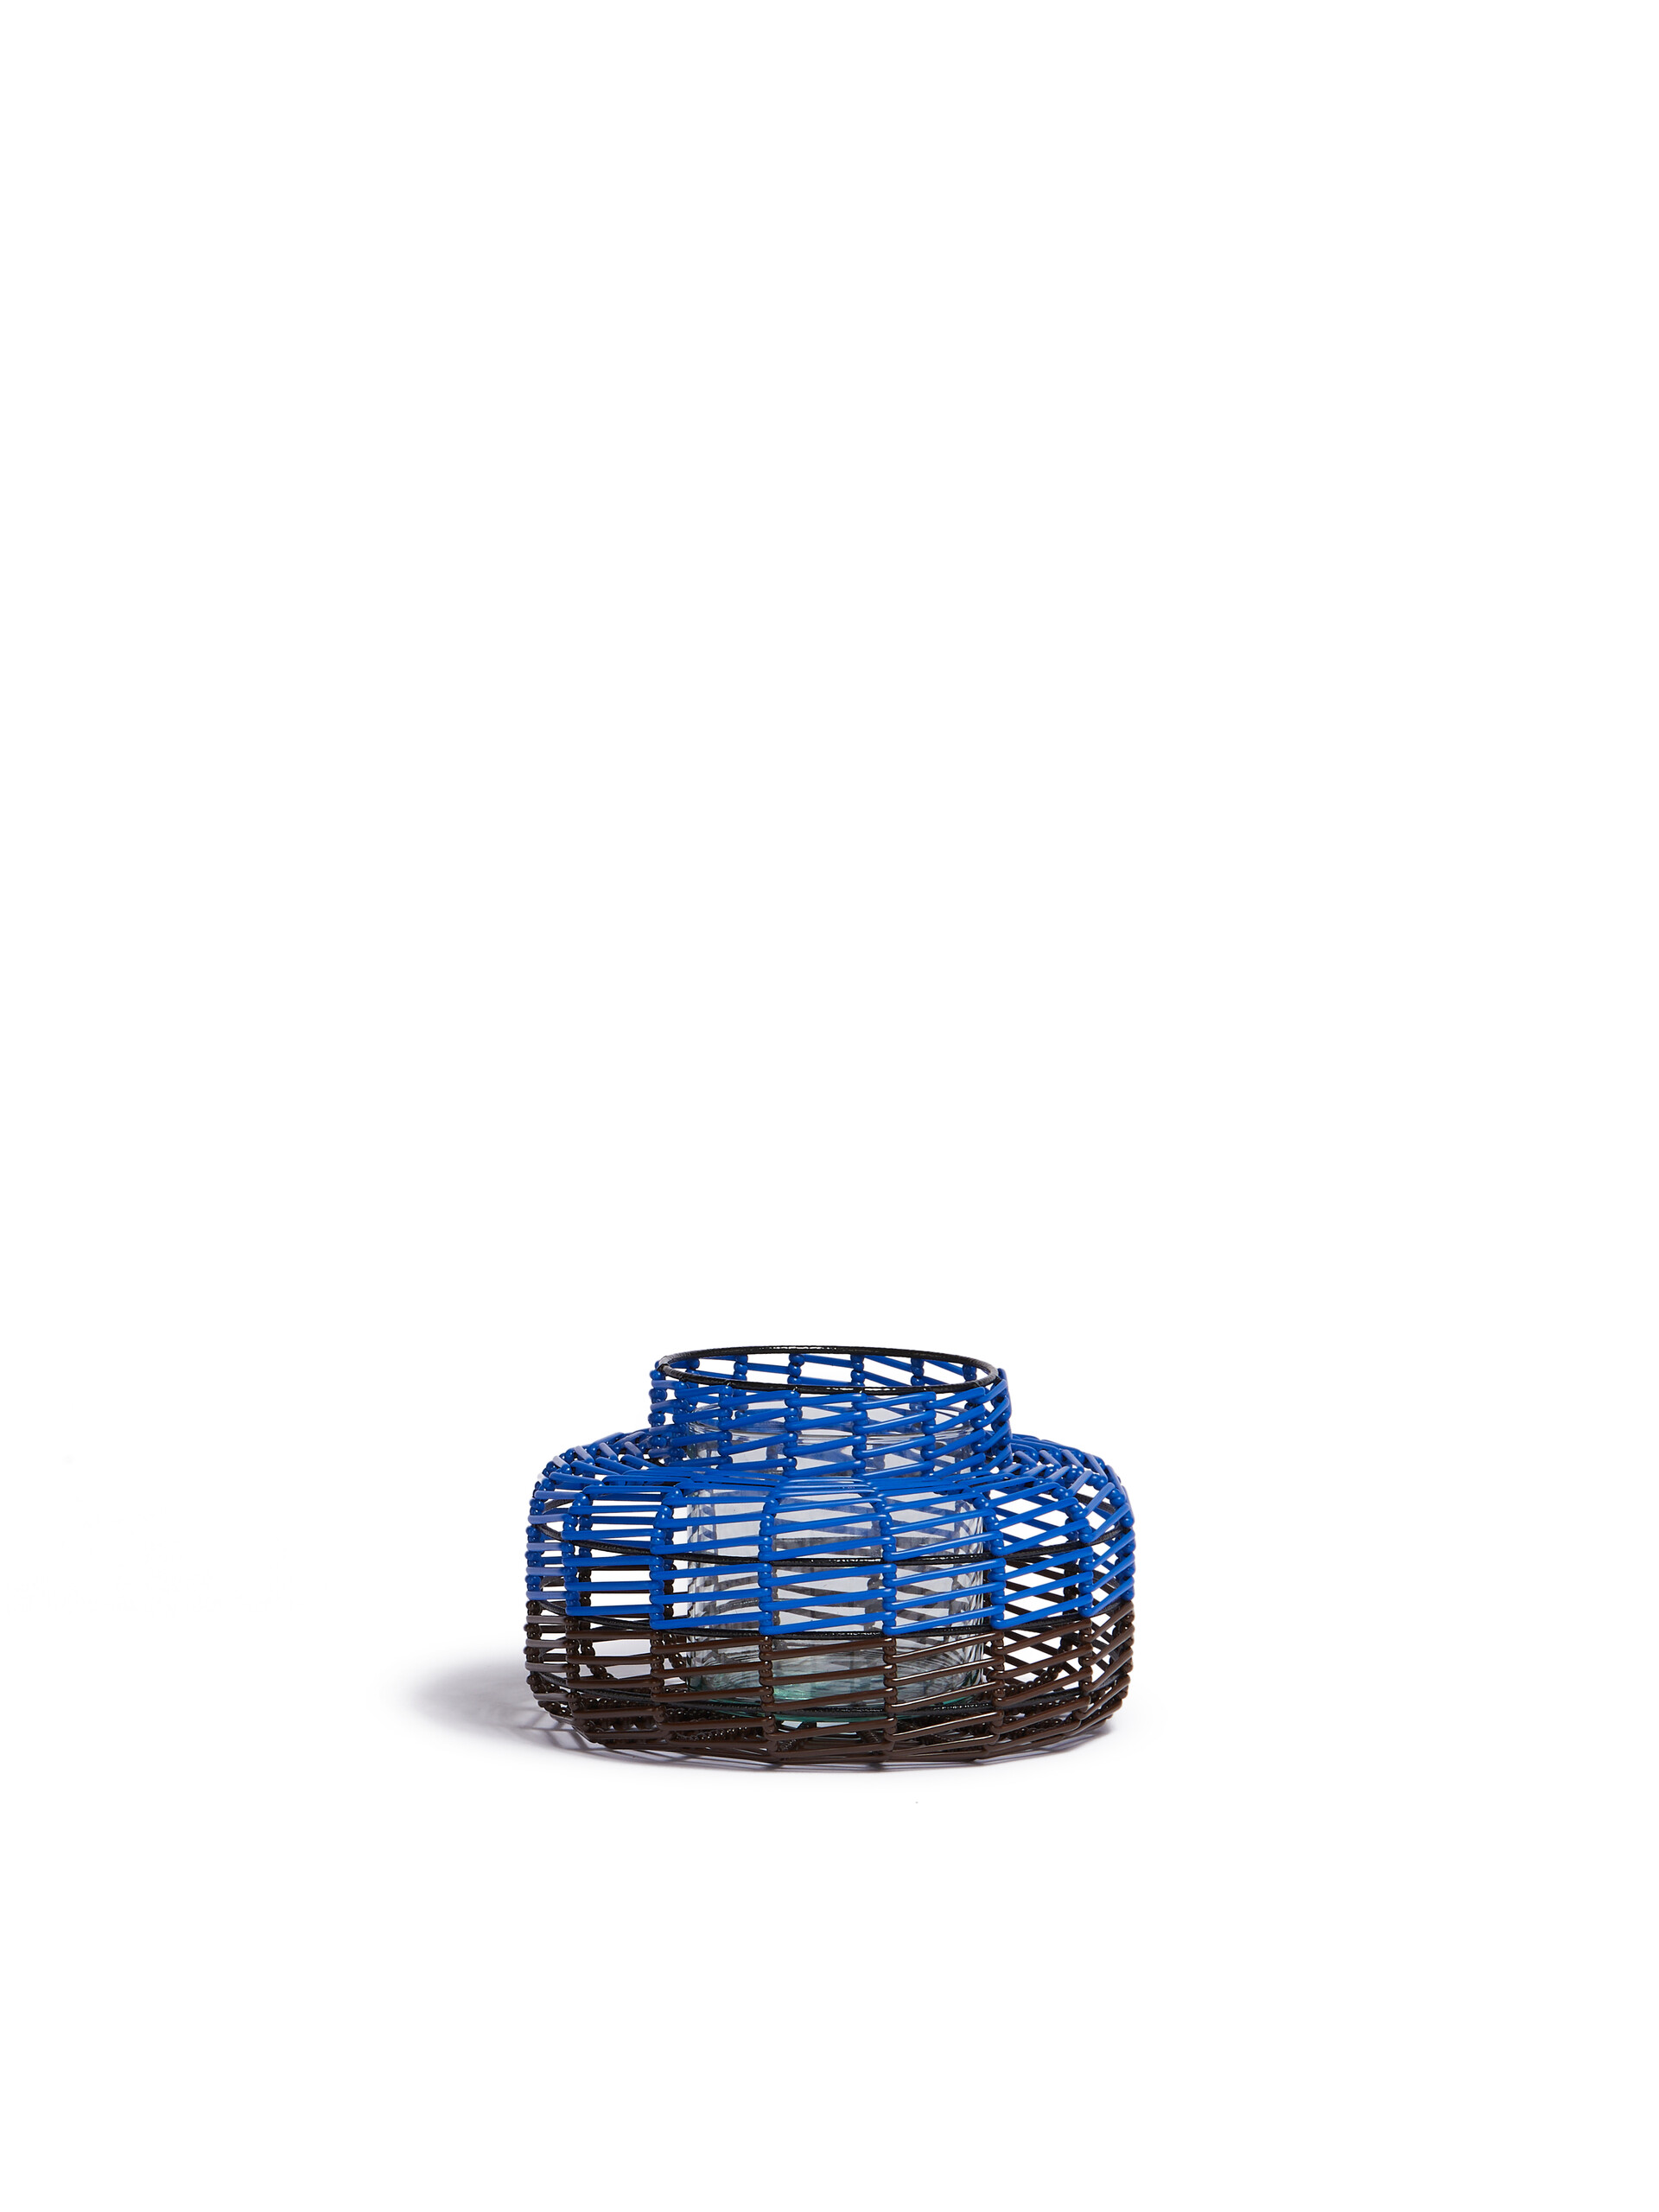 Blue MARNI MARKET woven cable vase - Furniture - Image 2